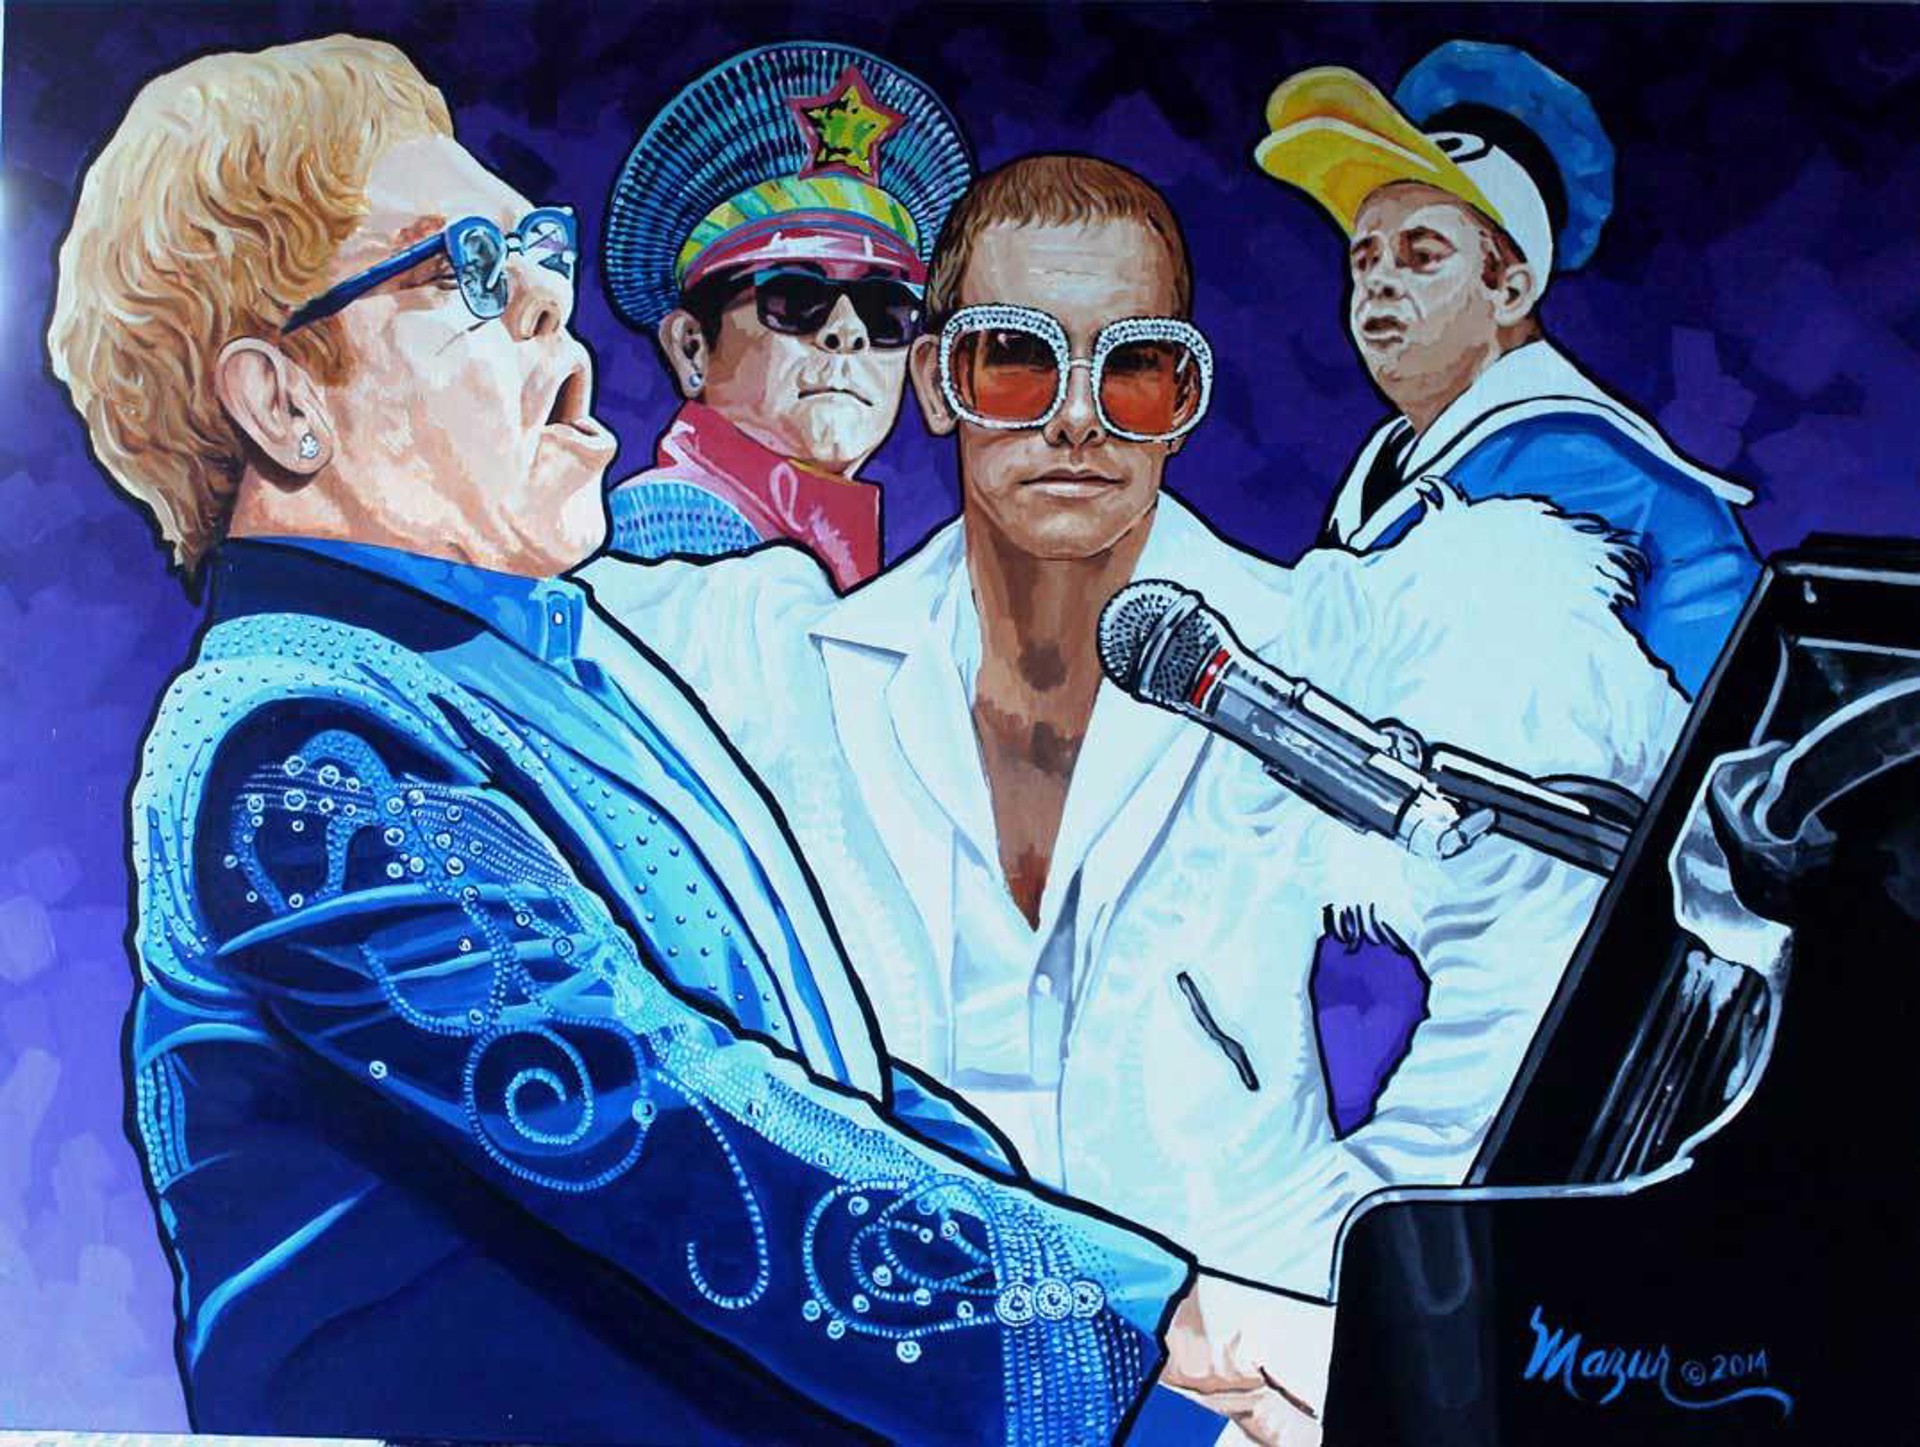 Elton John "Through The Years" by Ruby Mazur